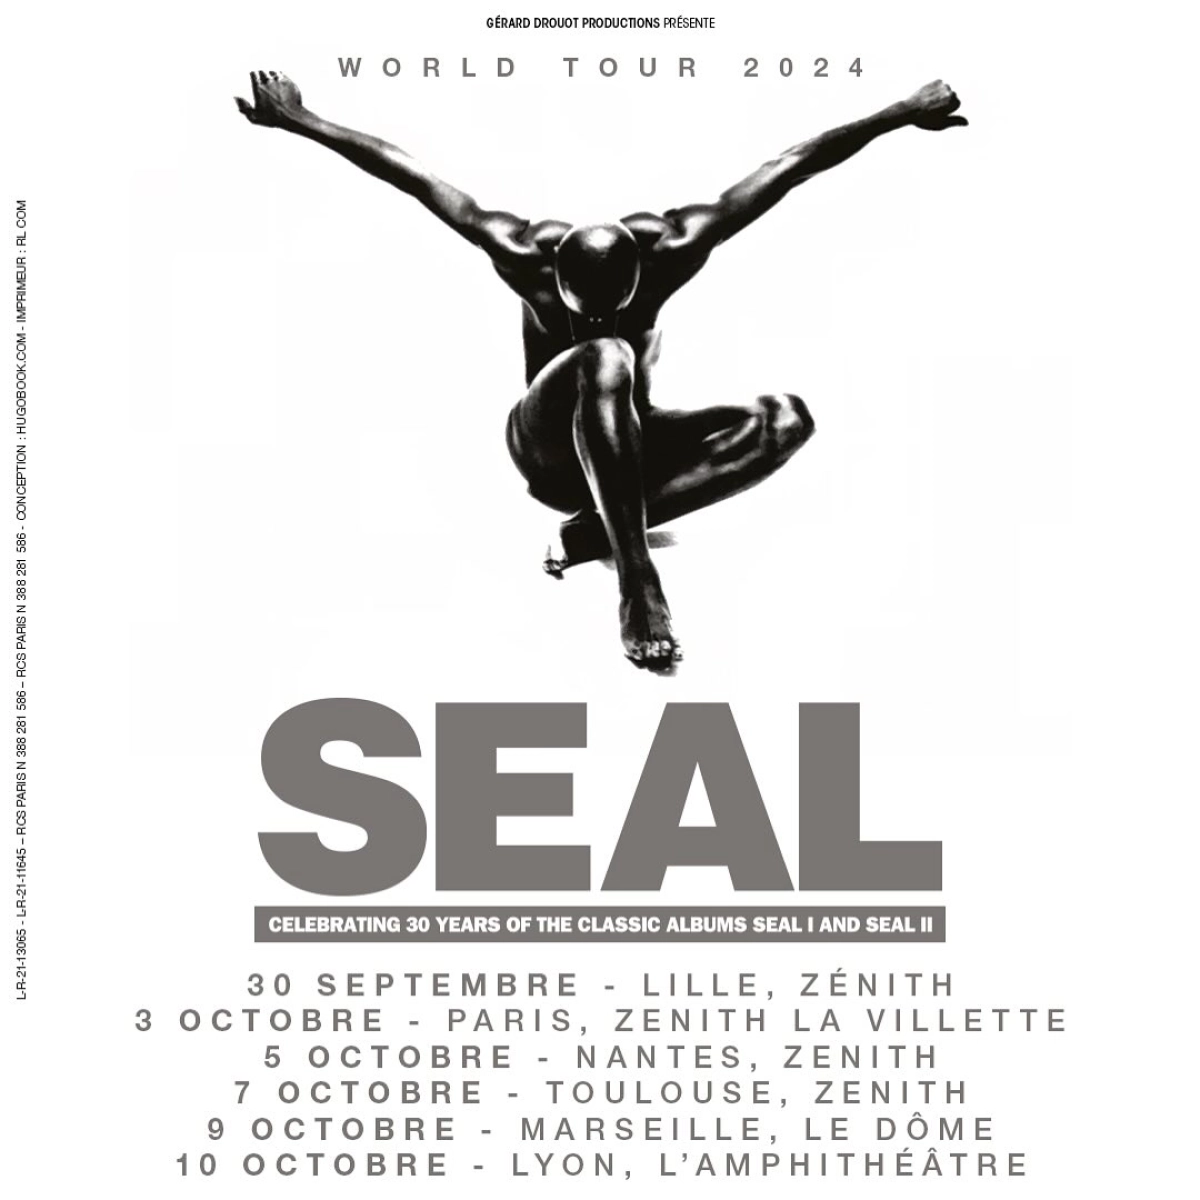 Seal al Zenith Lille Tickets